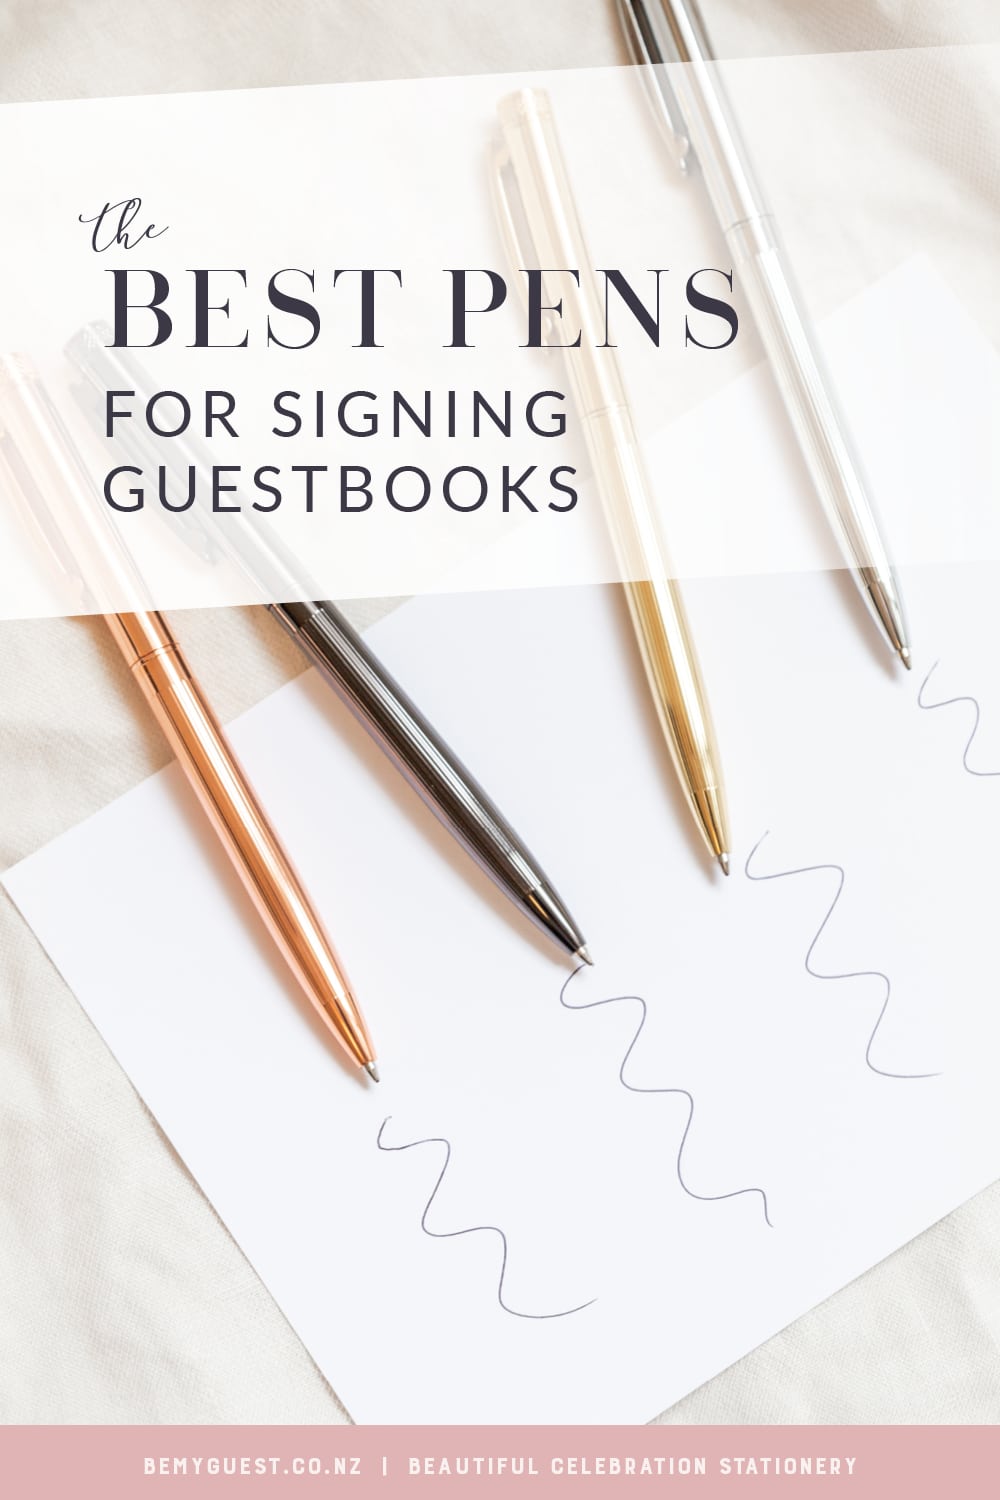 https://bemyguest.co.nz/wp-content/uploads/2021/02/The-Best-Pens-for-Signing-Guestbooks-Pinterest.jpg